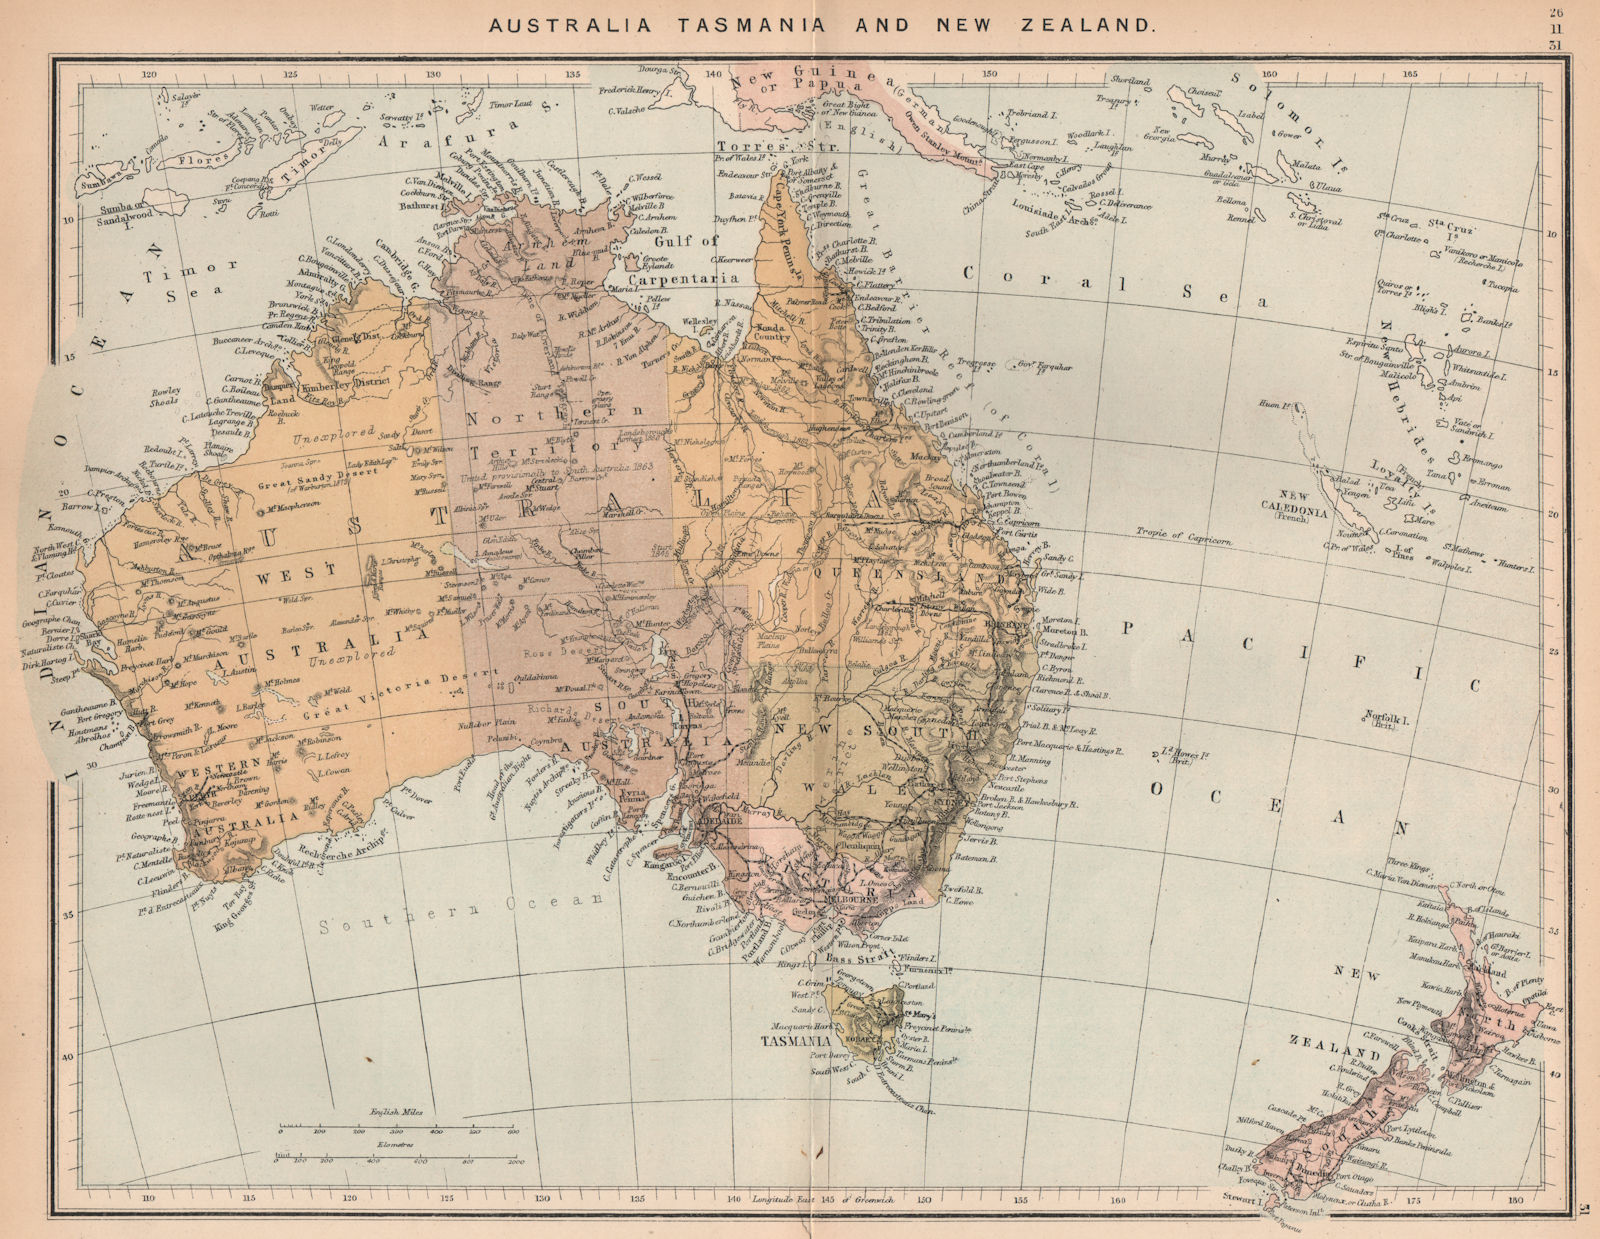 Associate Product Australia Tasmania and New Zealand. Australasia 1885 old antique map chart